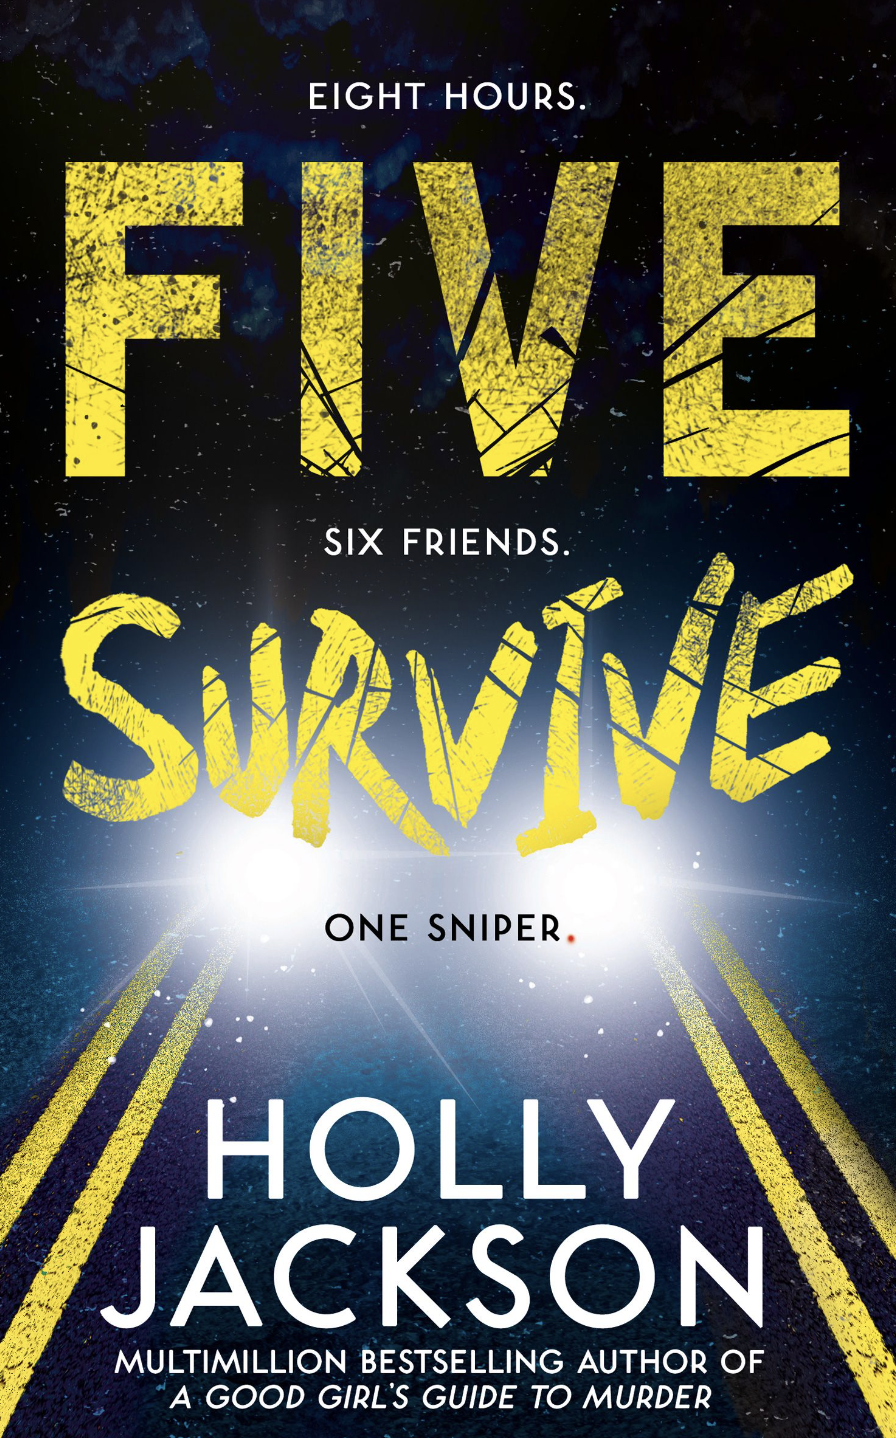 Five Survive - Holly Jackson